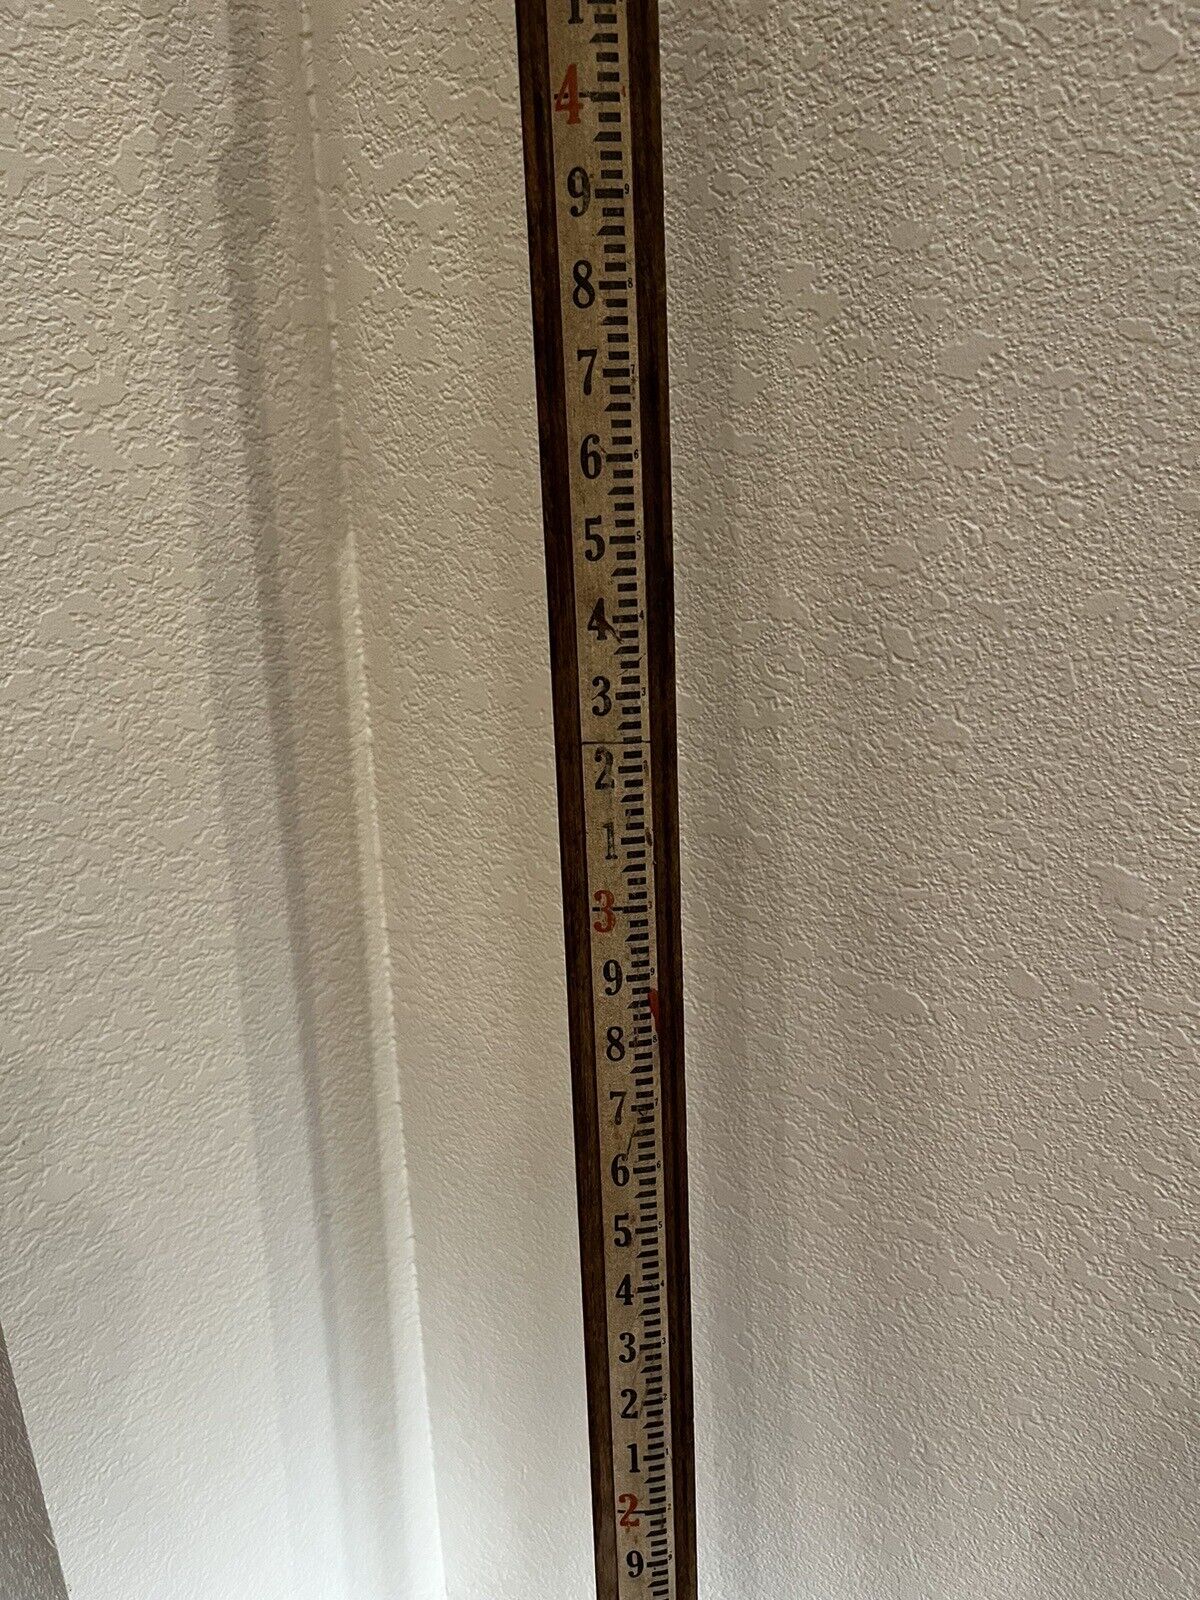 Vintage Survey Measuring Stick 14' Wood Telescopic Grade Leveling Rod 3 Piece